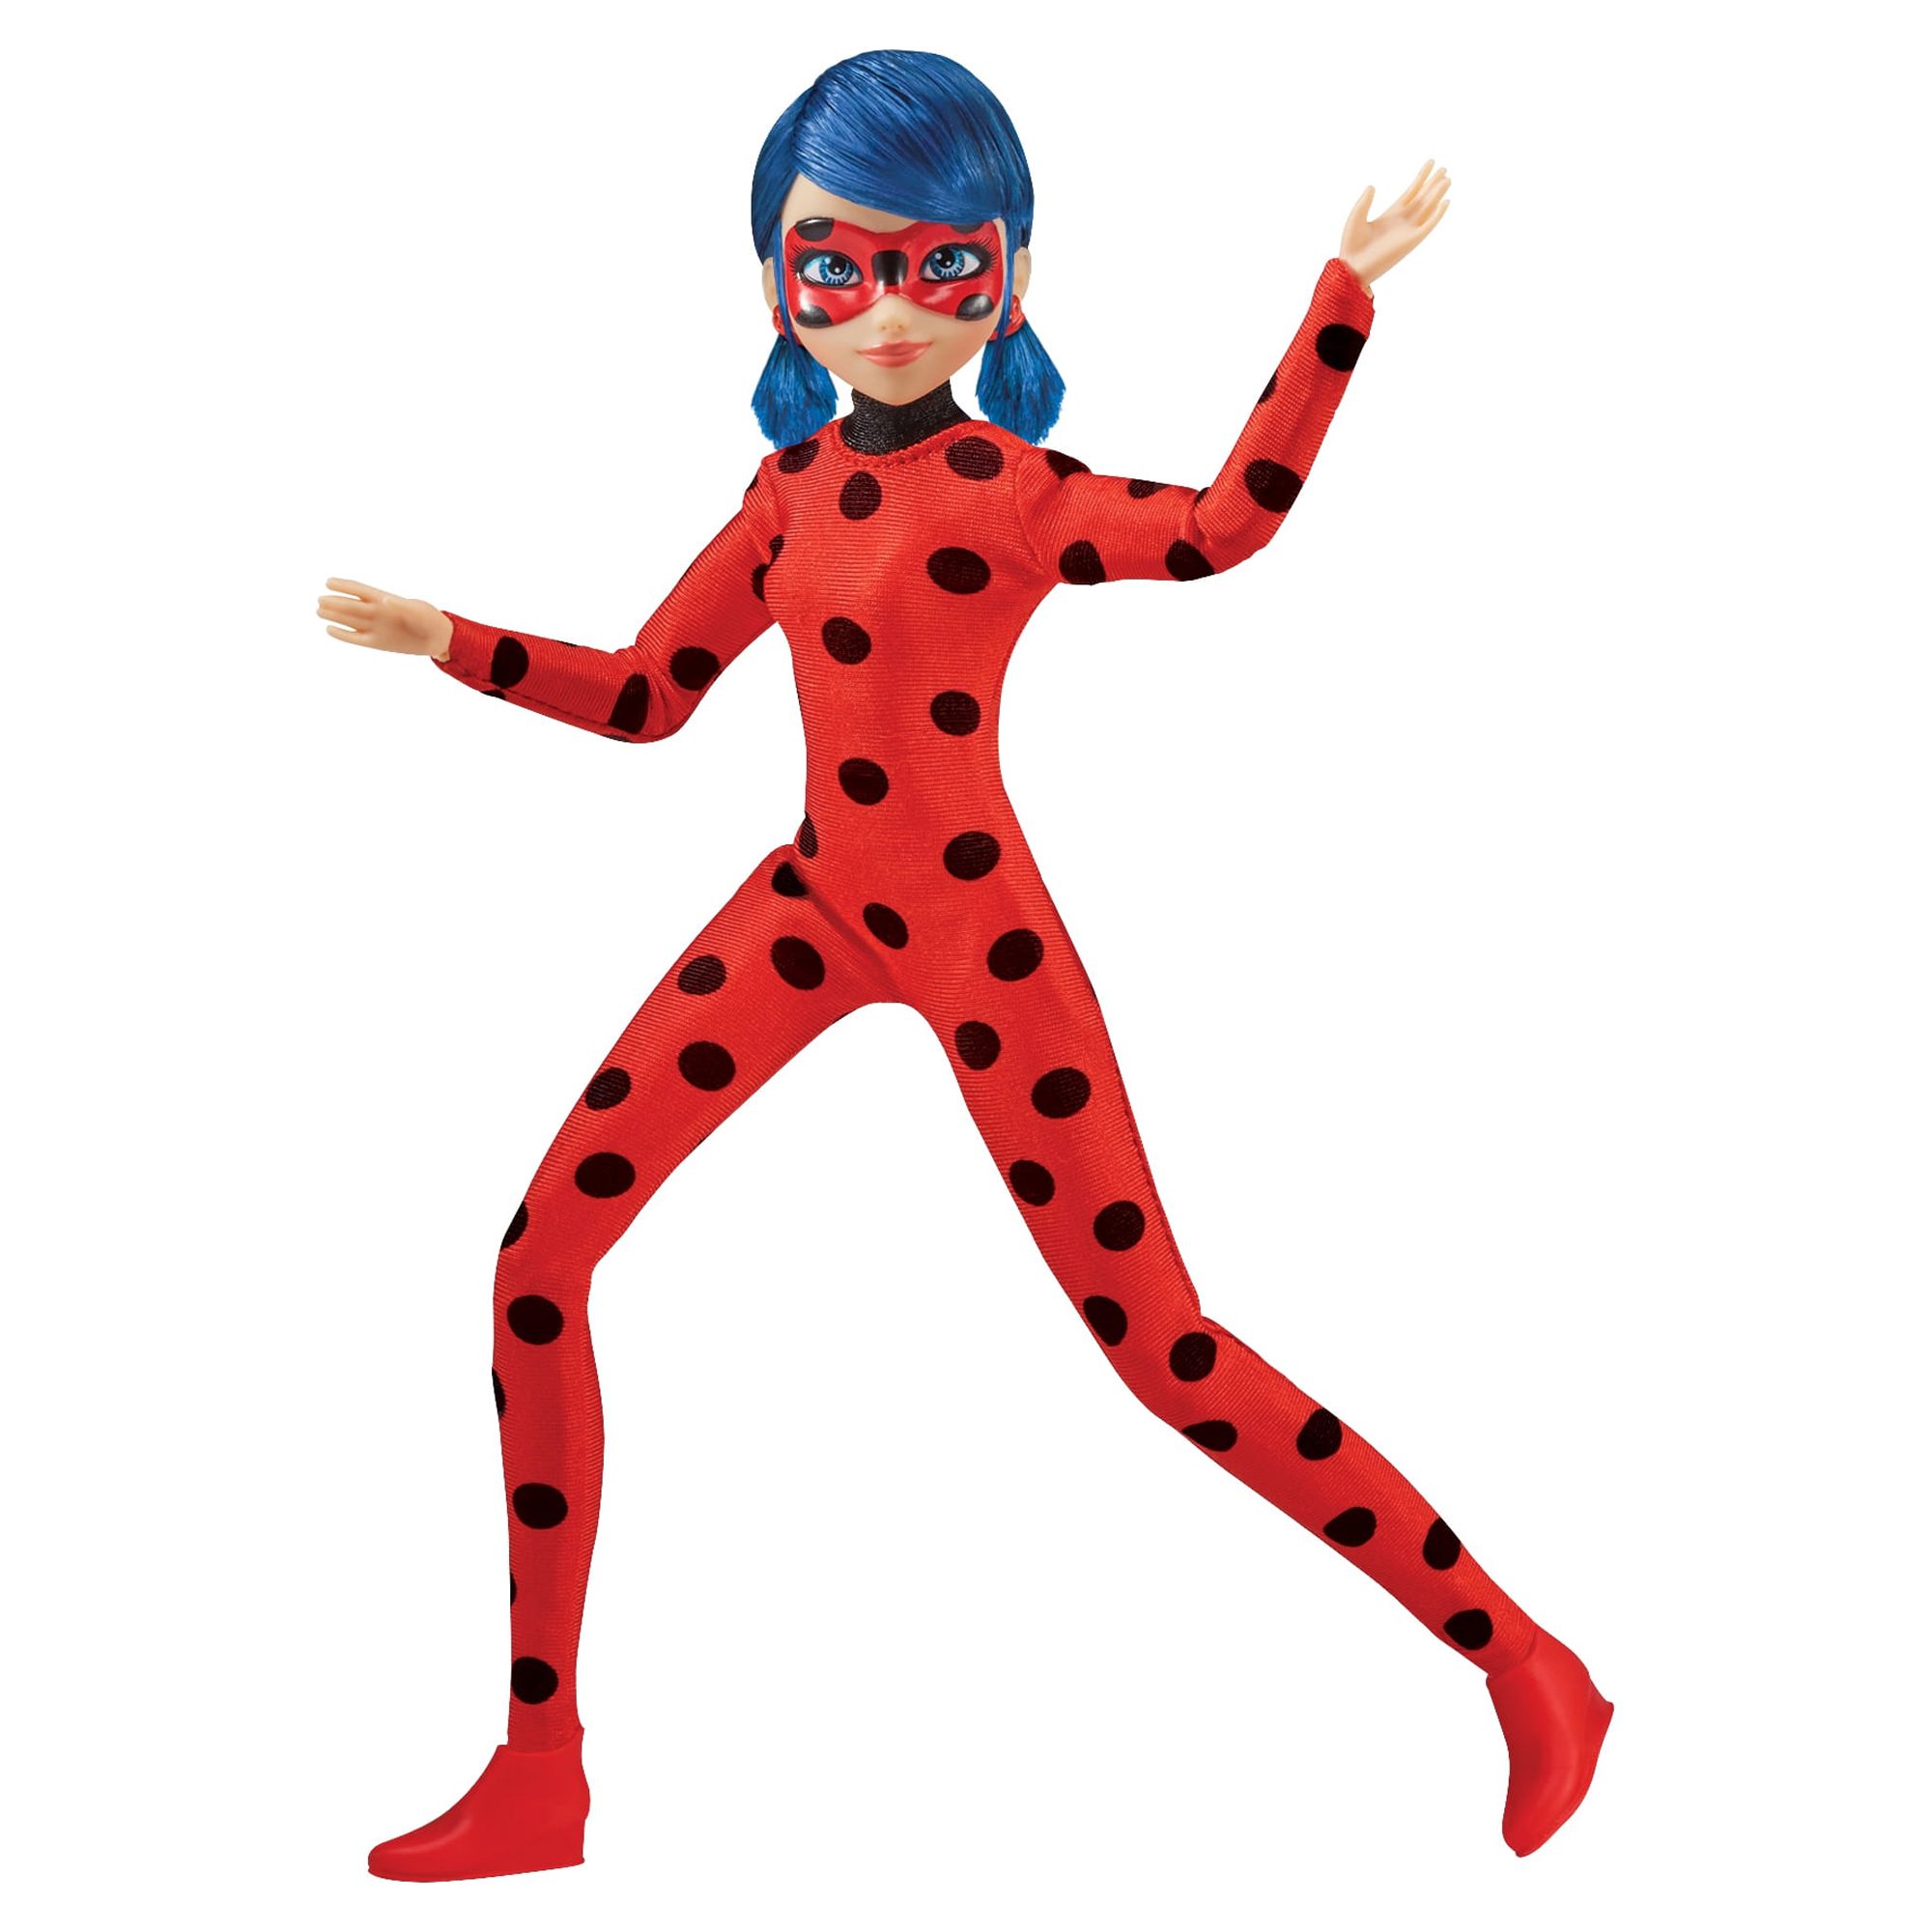 Miraculous Ladybug Doll - image 4 of 6